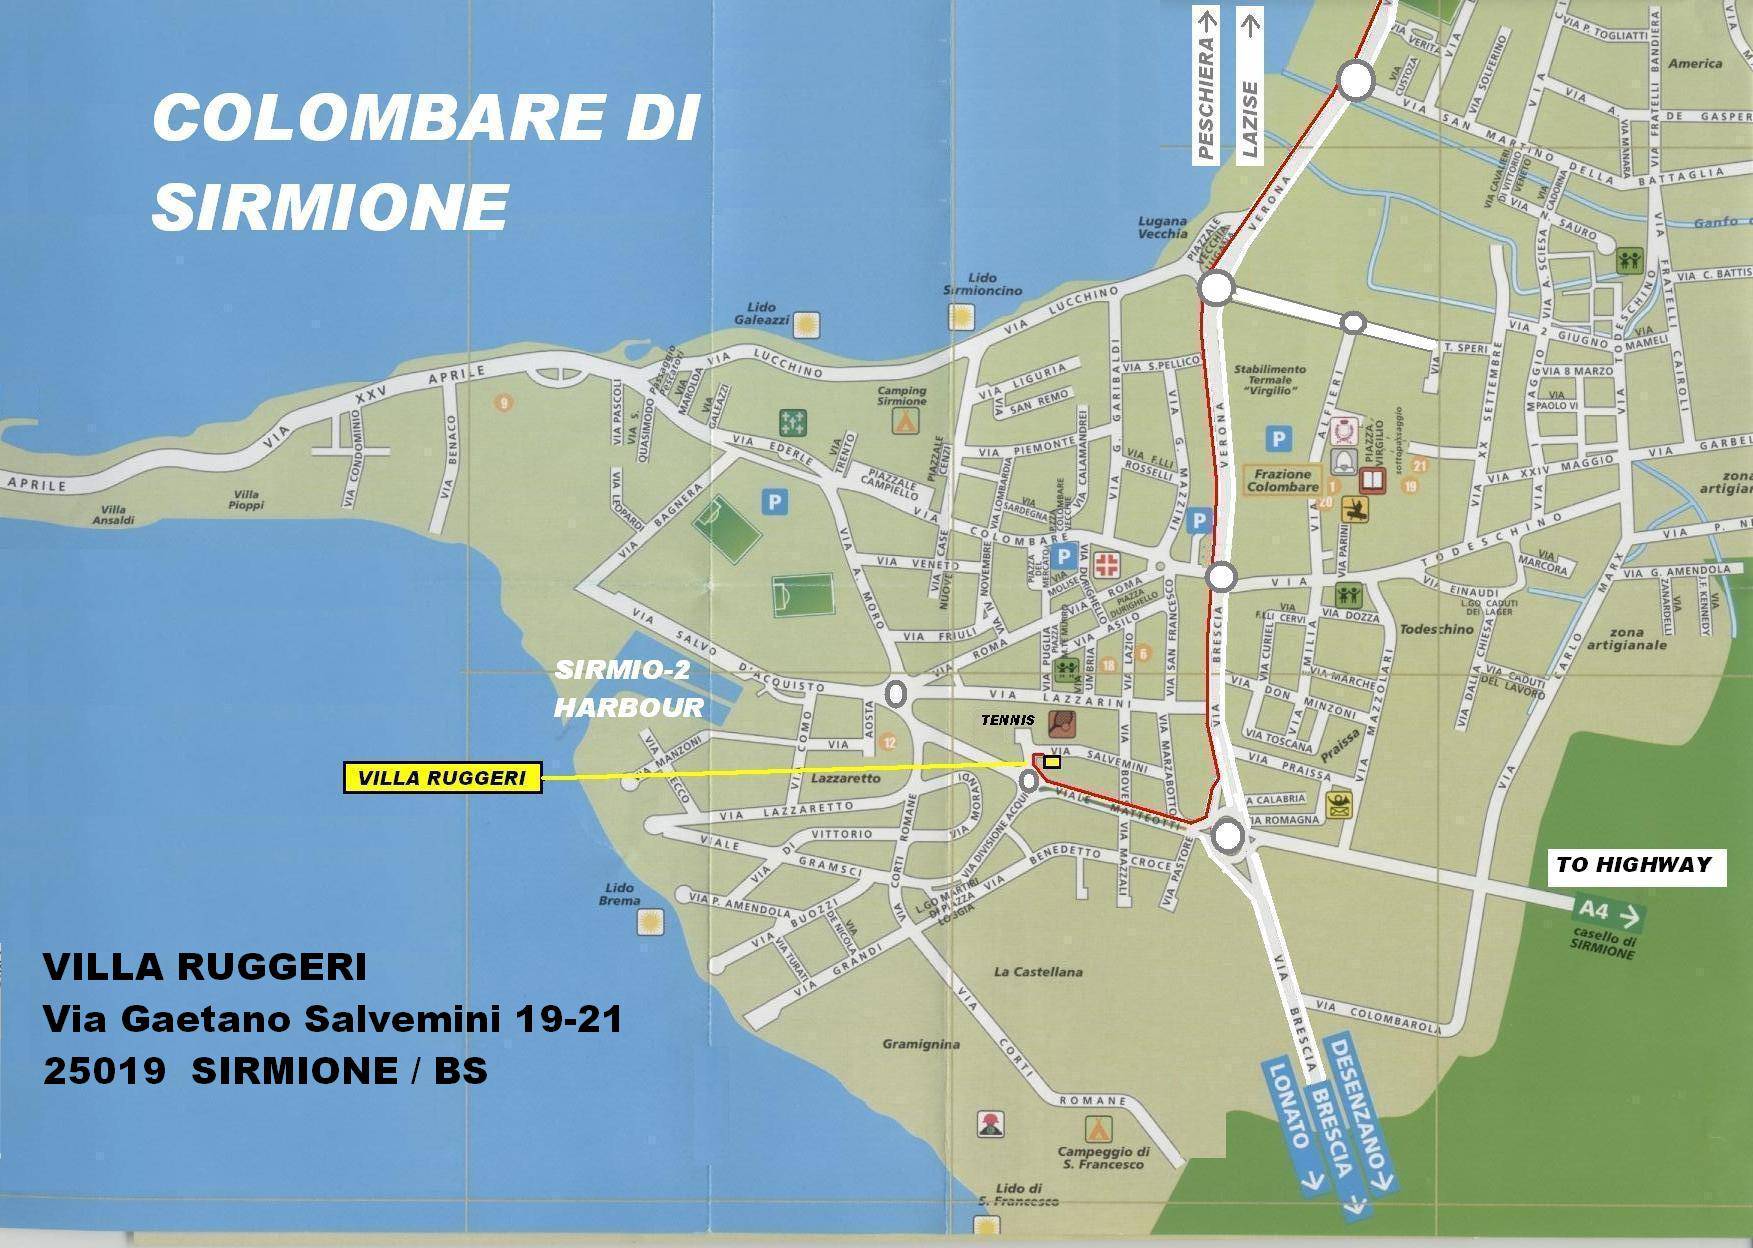 Сирмионе на карте италии гражданство италии через брак